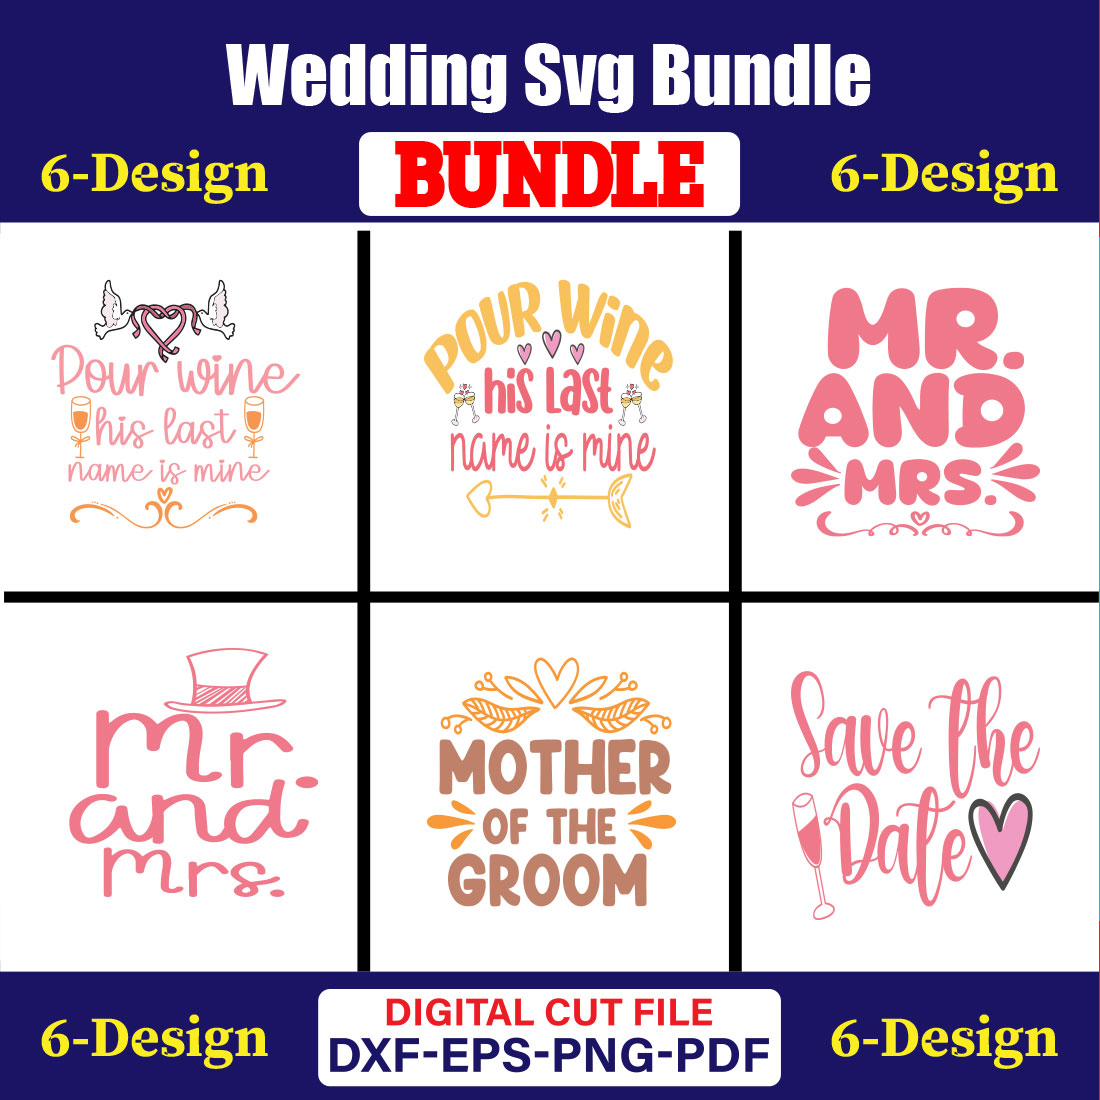 Wedding T-shirt Design Bundle Vol-40 cover image.